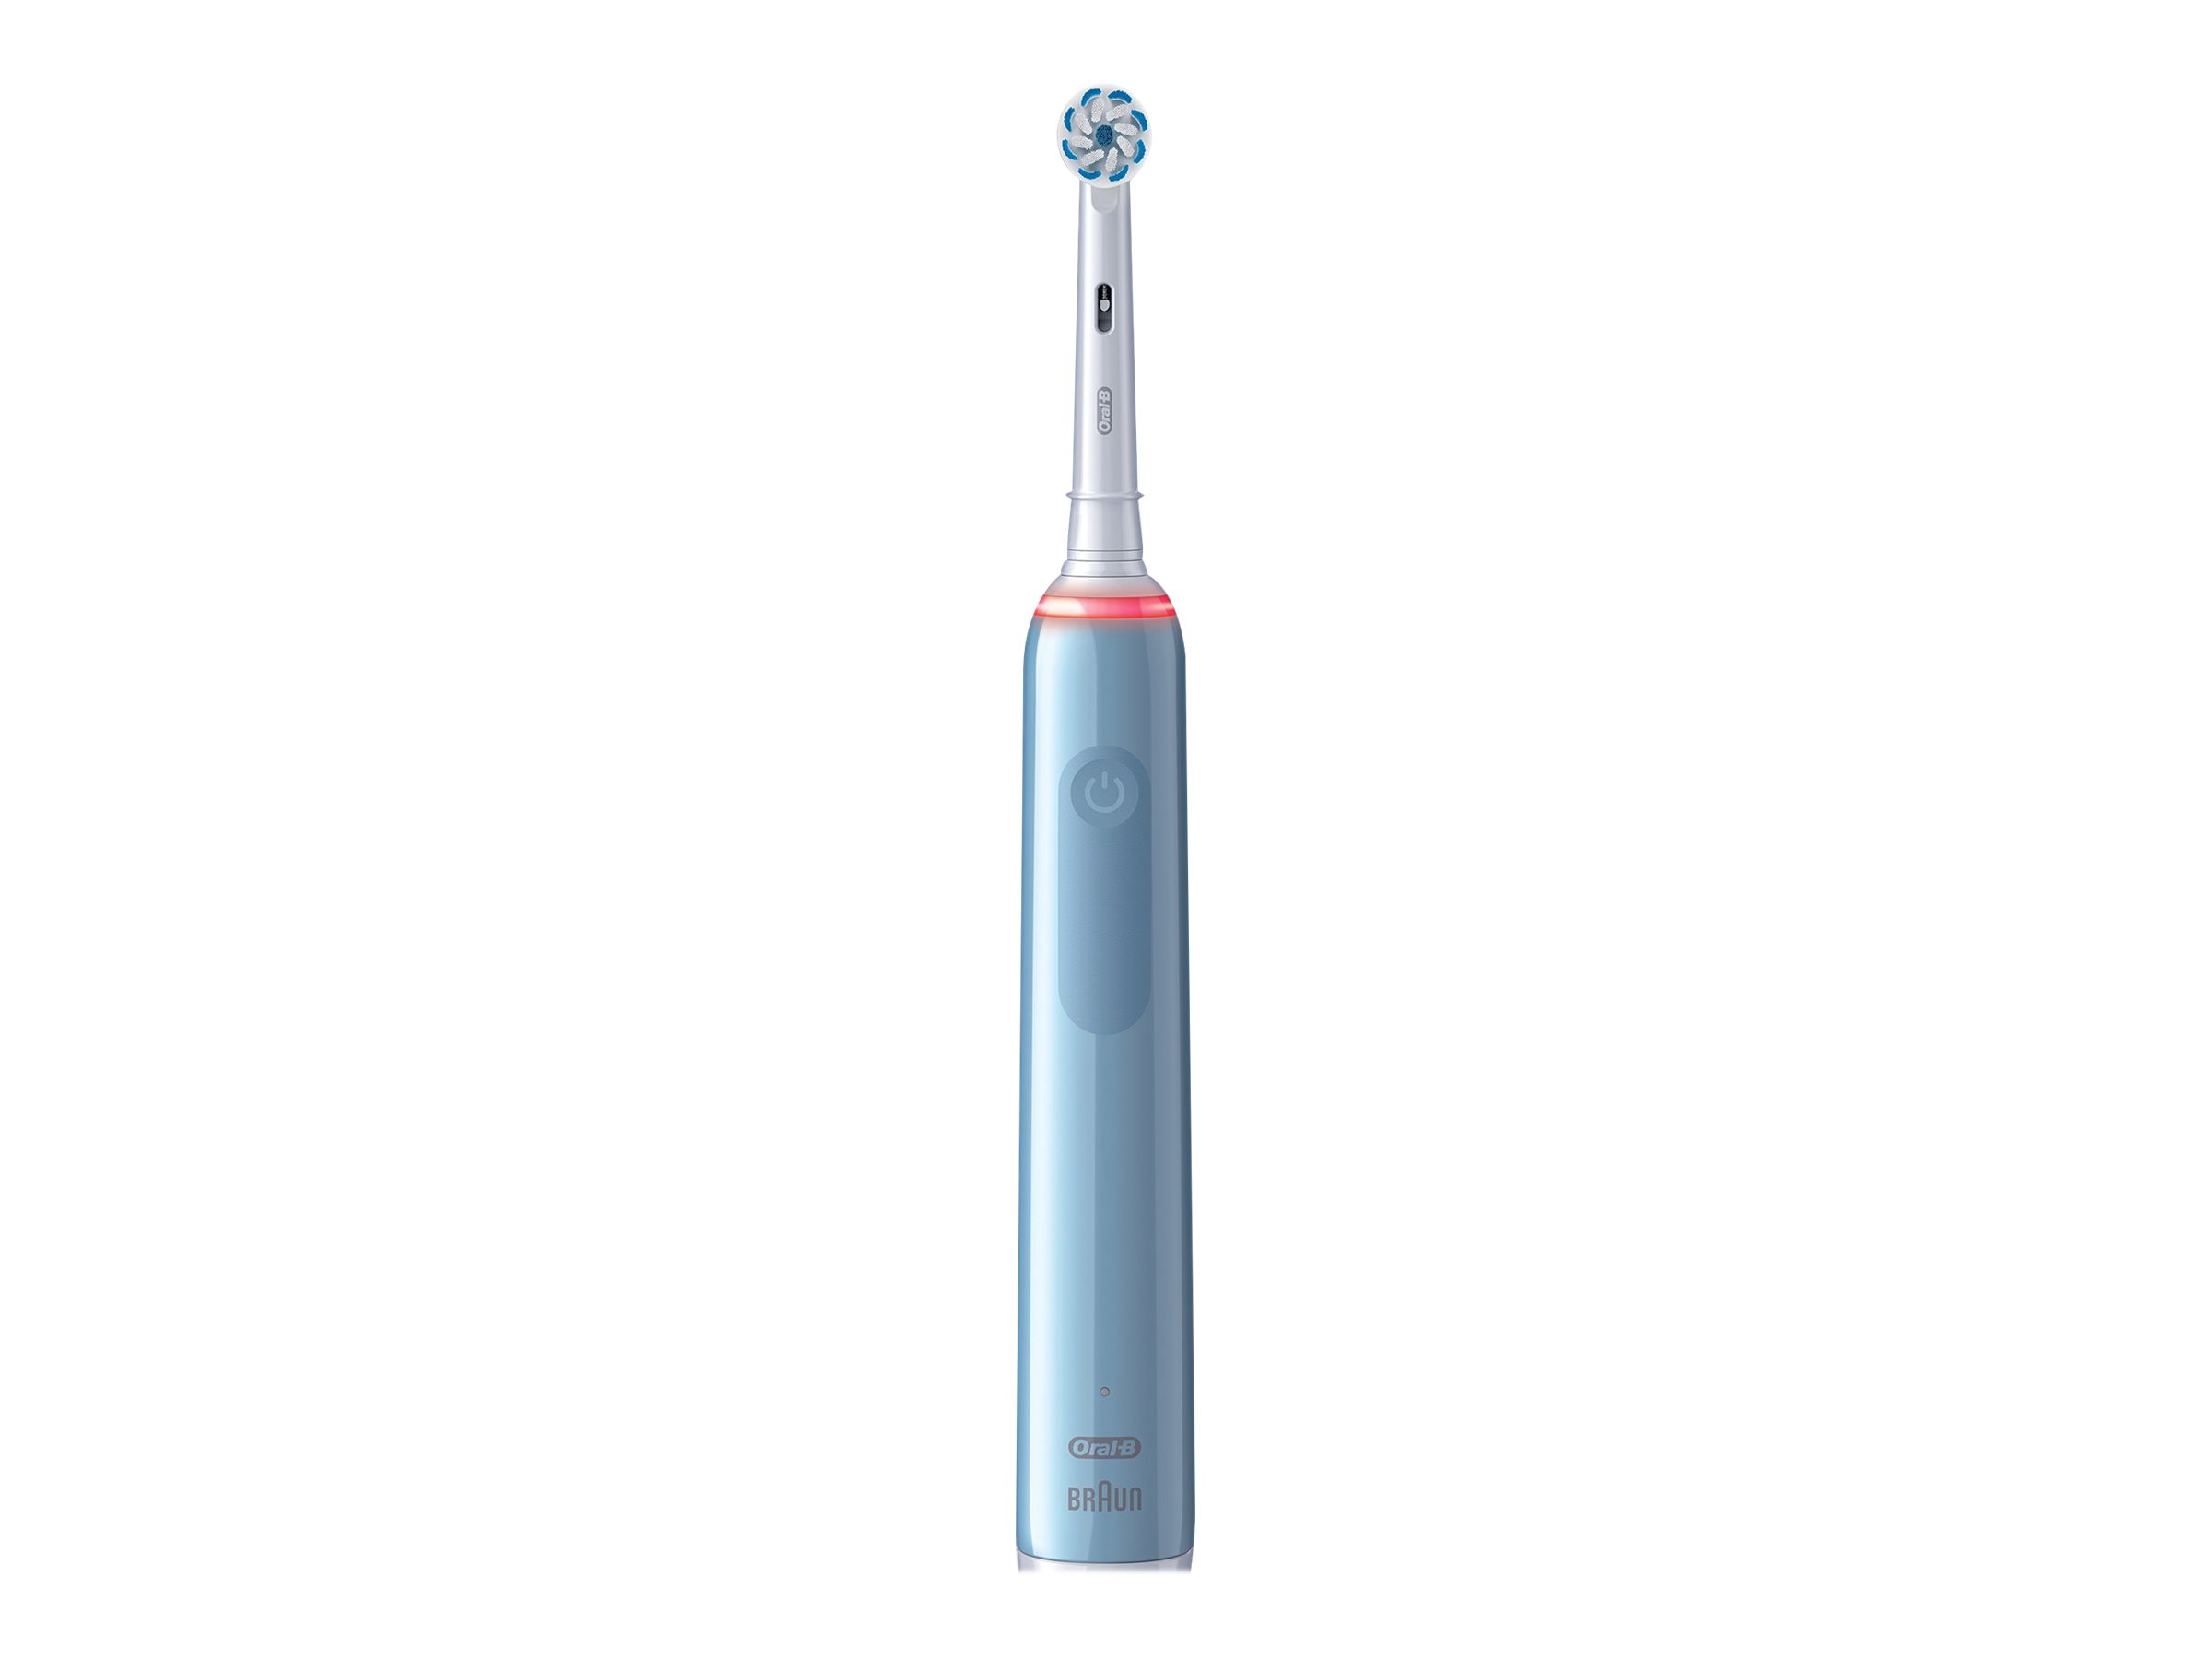 Oral-B Pro 3 3000 Sensitive Clean - Zahnbürste